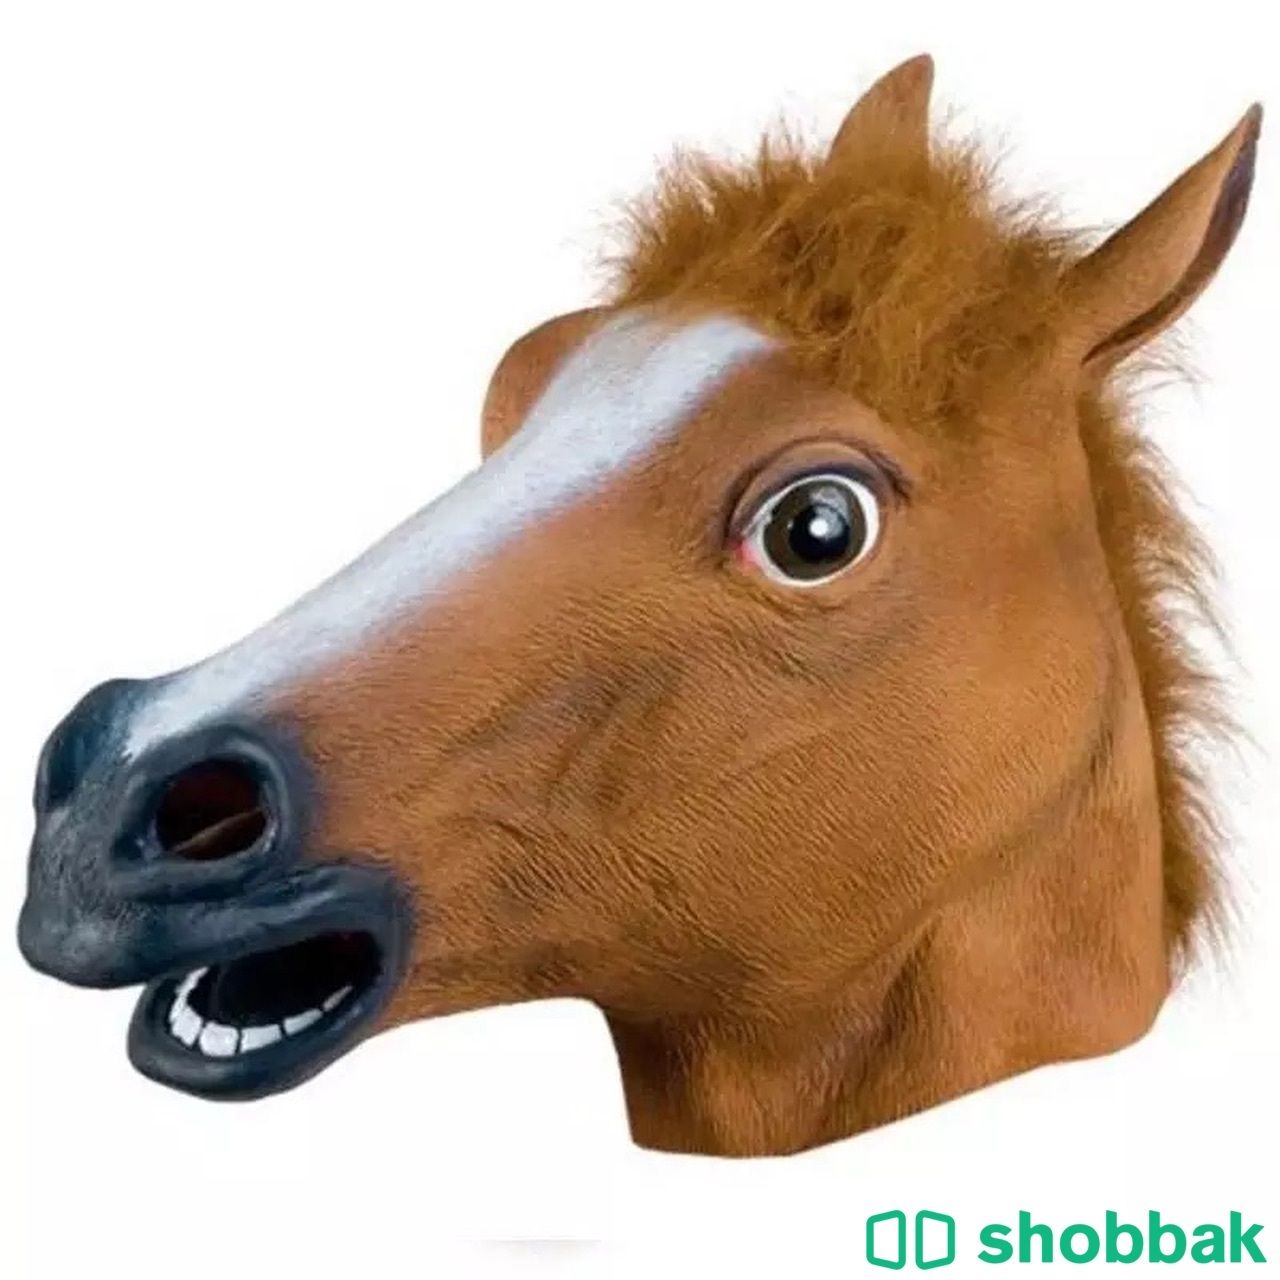 قناع الحصان Shobbak Saudi Arabia